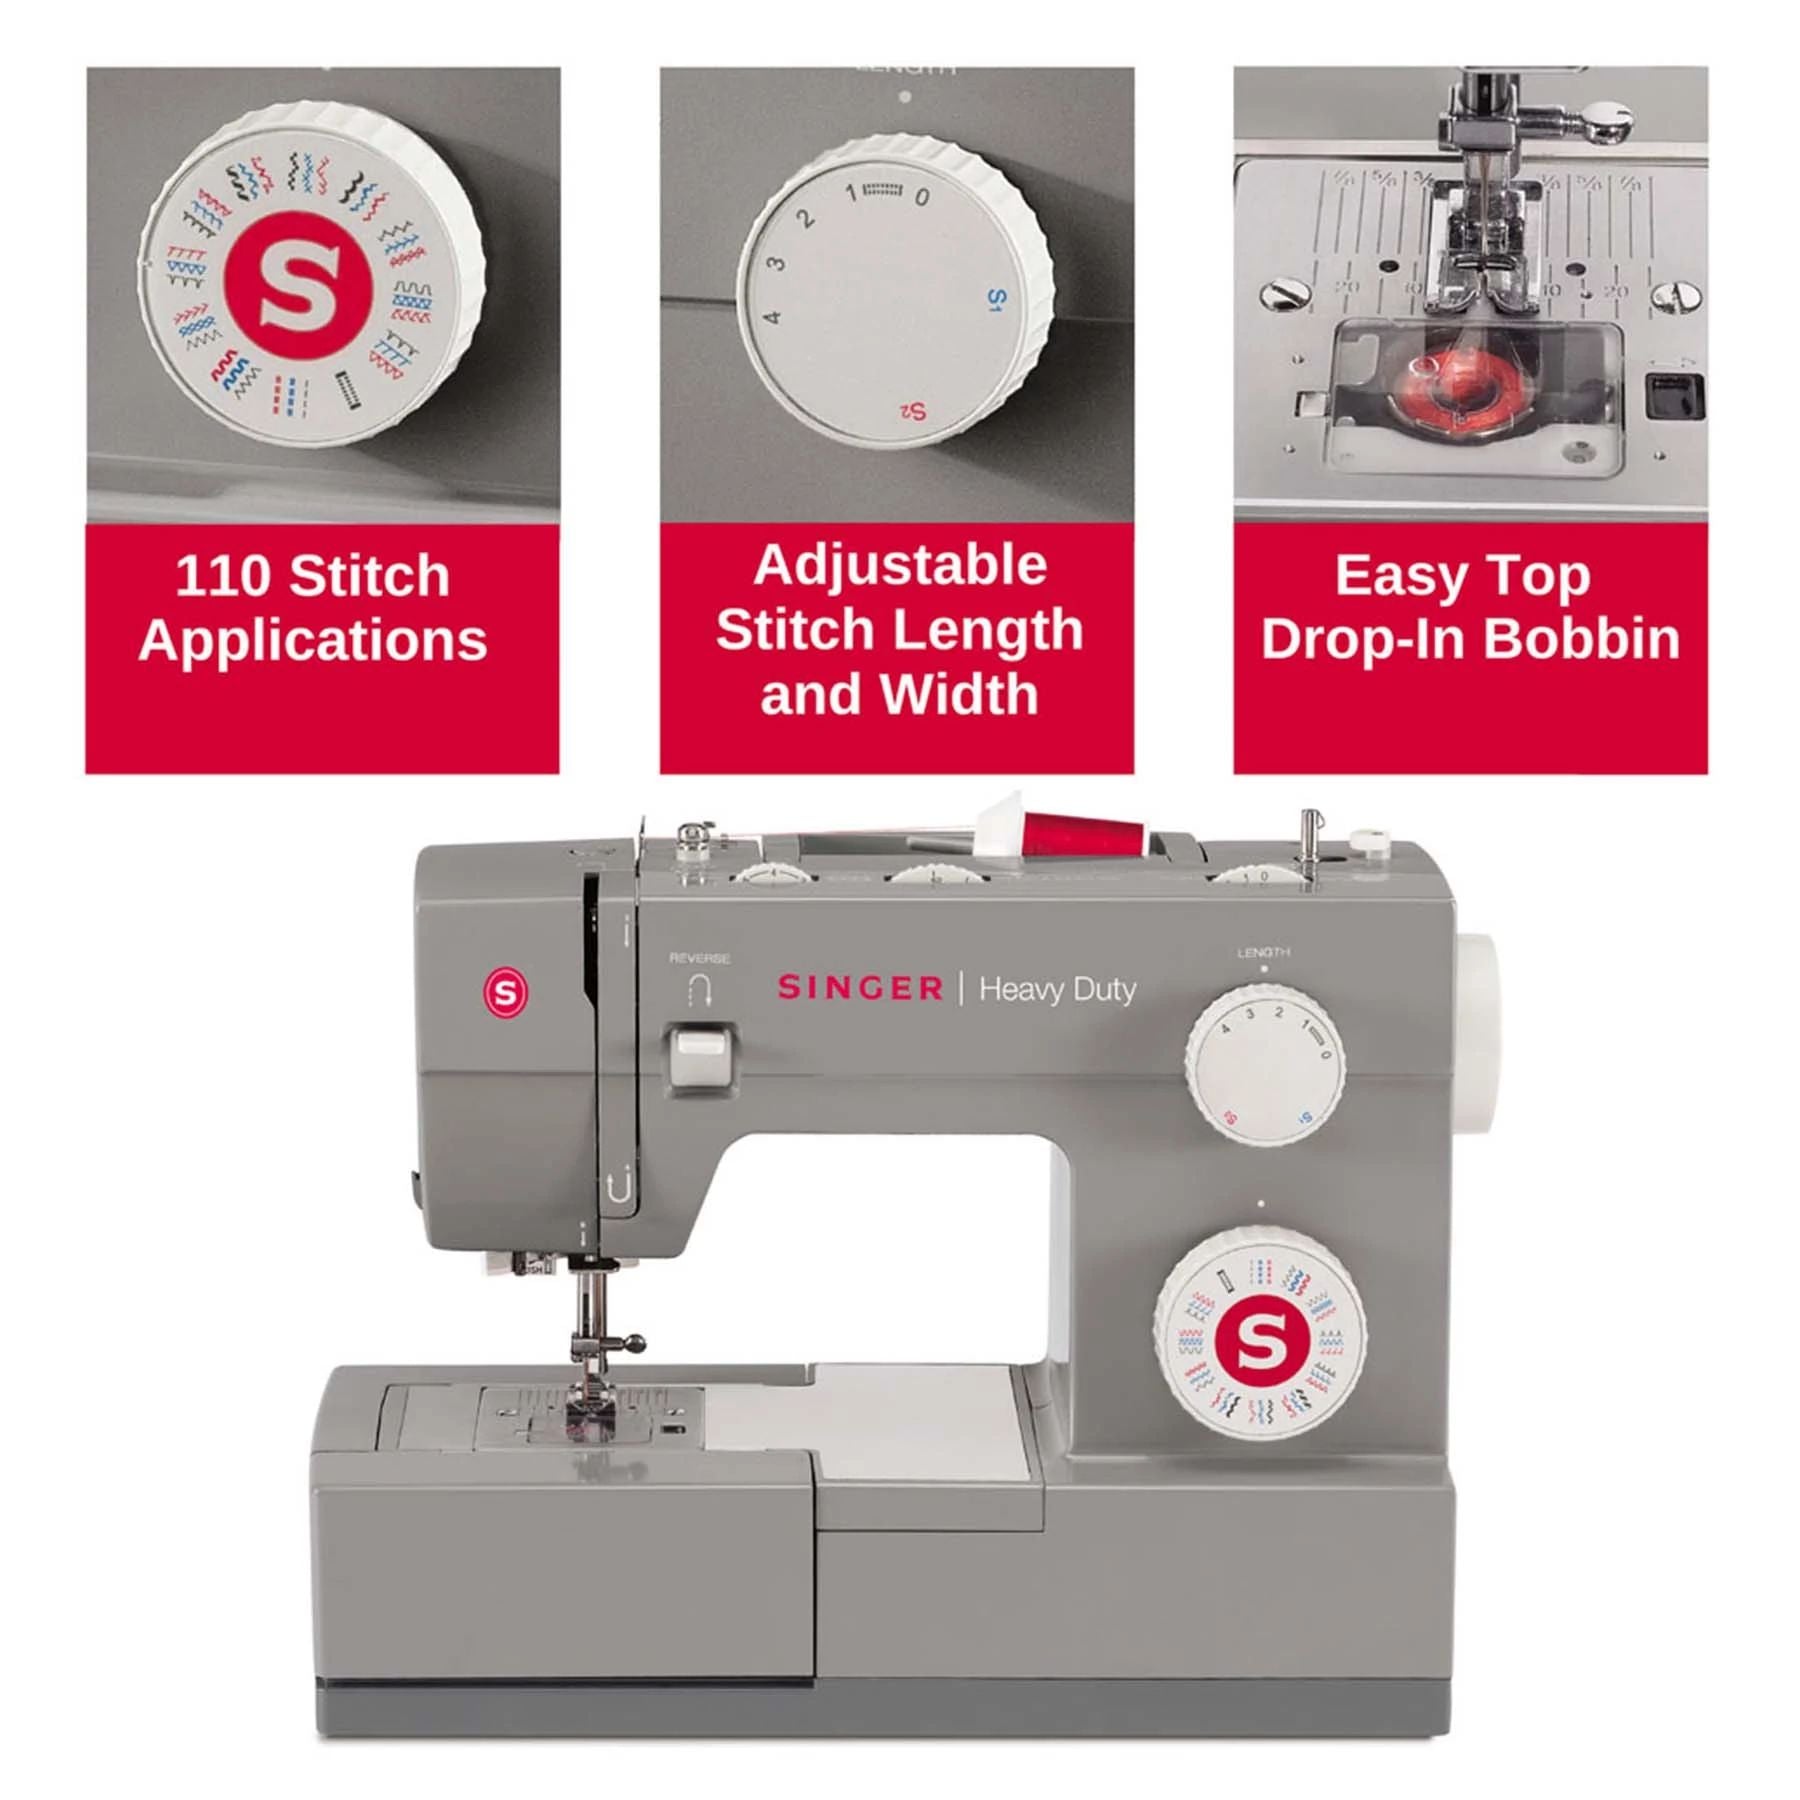 SINGER® Heavy Duty 4423 Sewing Machine